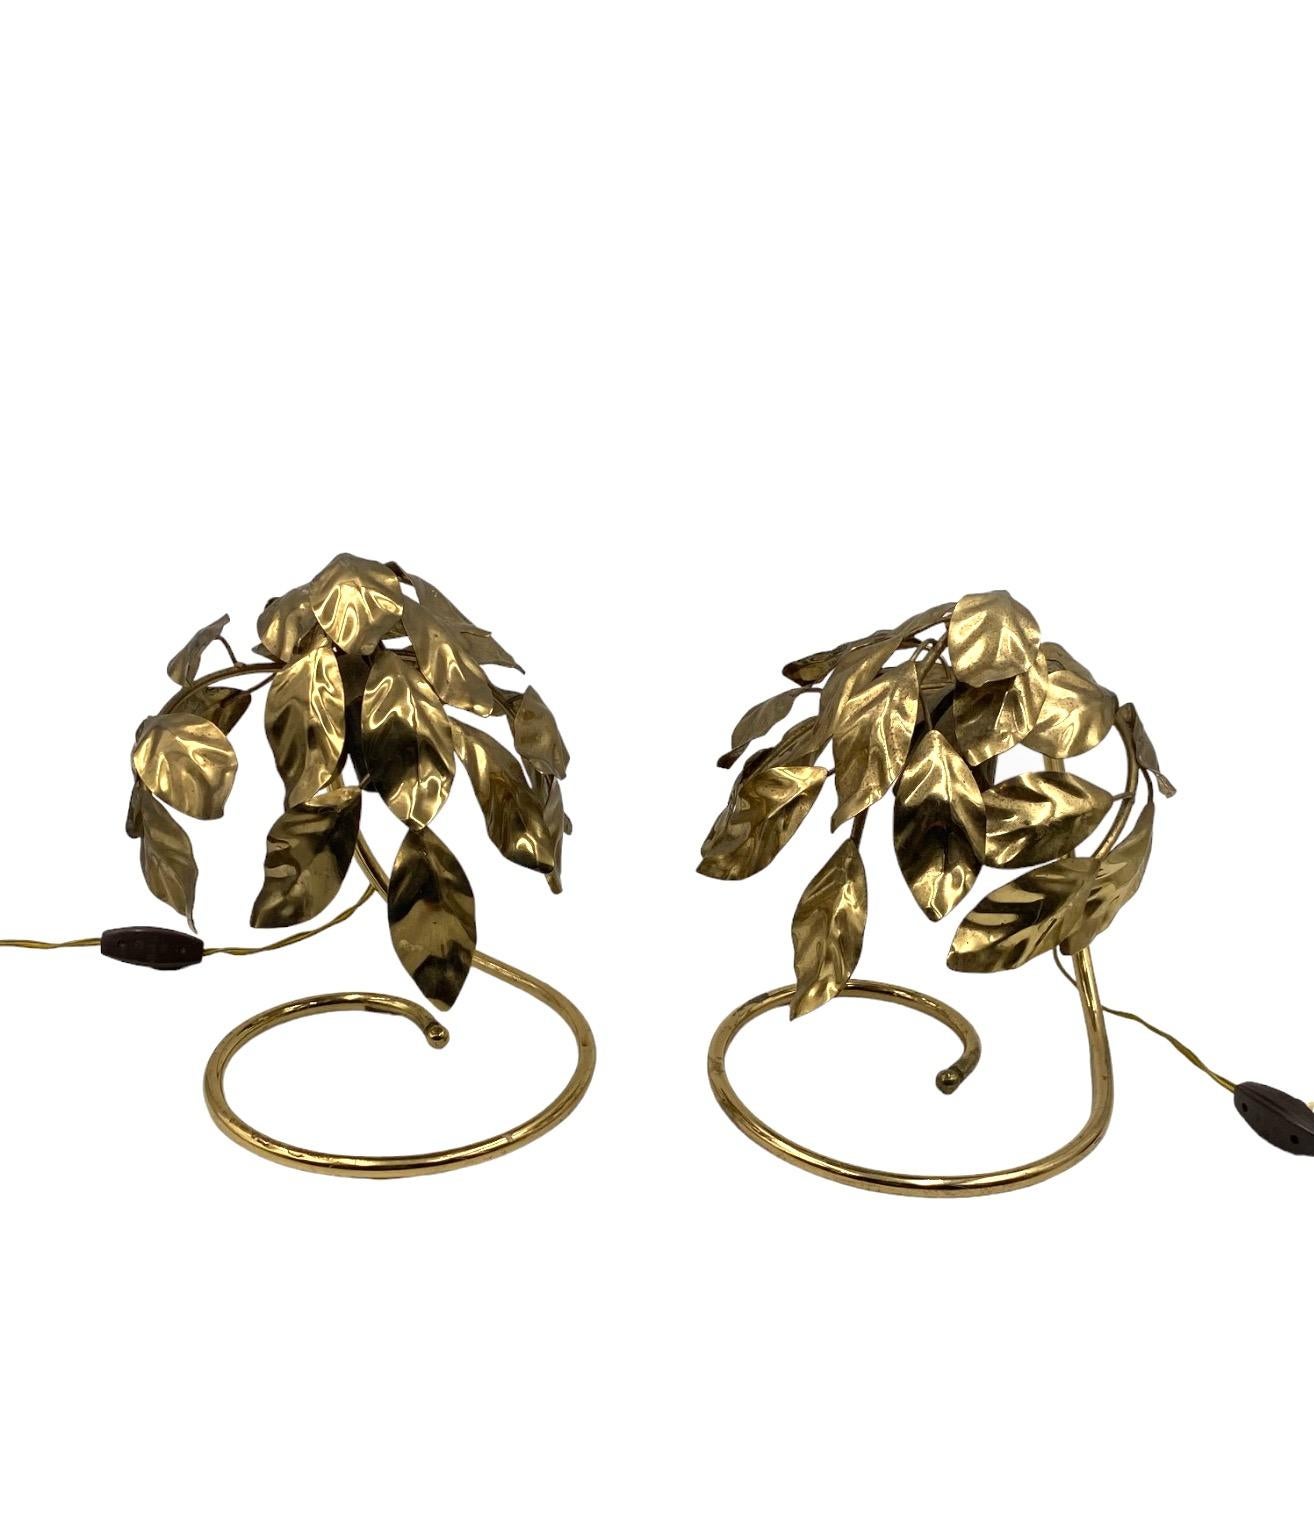 Hollywood regency set of 2 brass leaves table lamps, Bottega Gadda Italy, 1970s For Sale 9